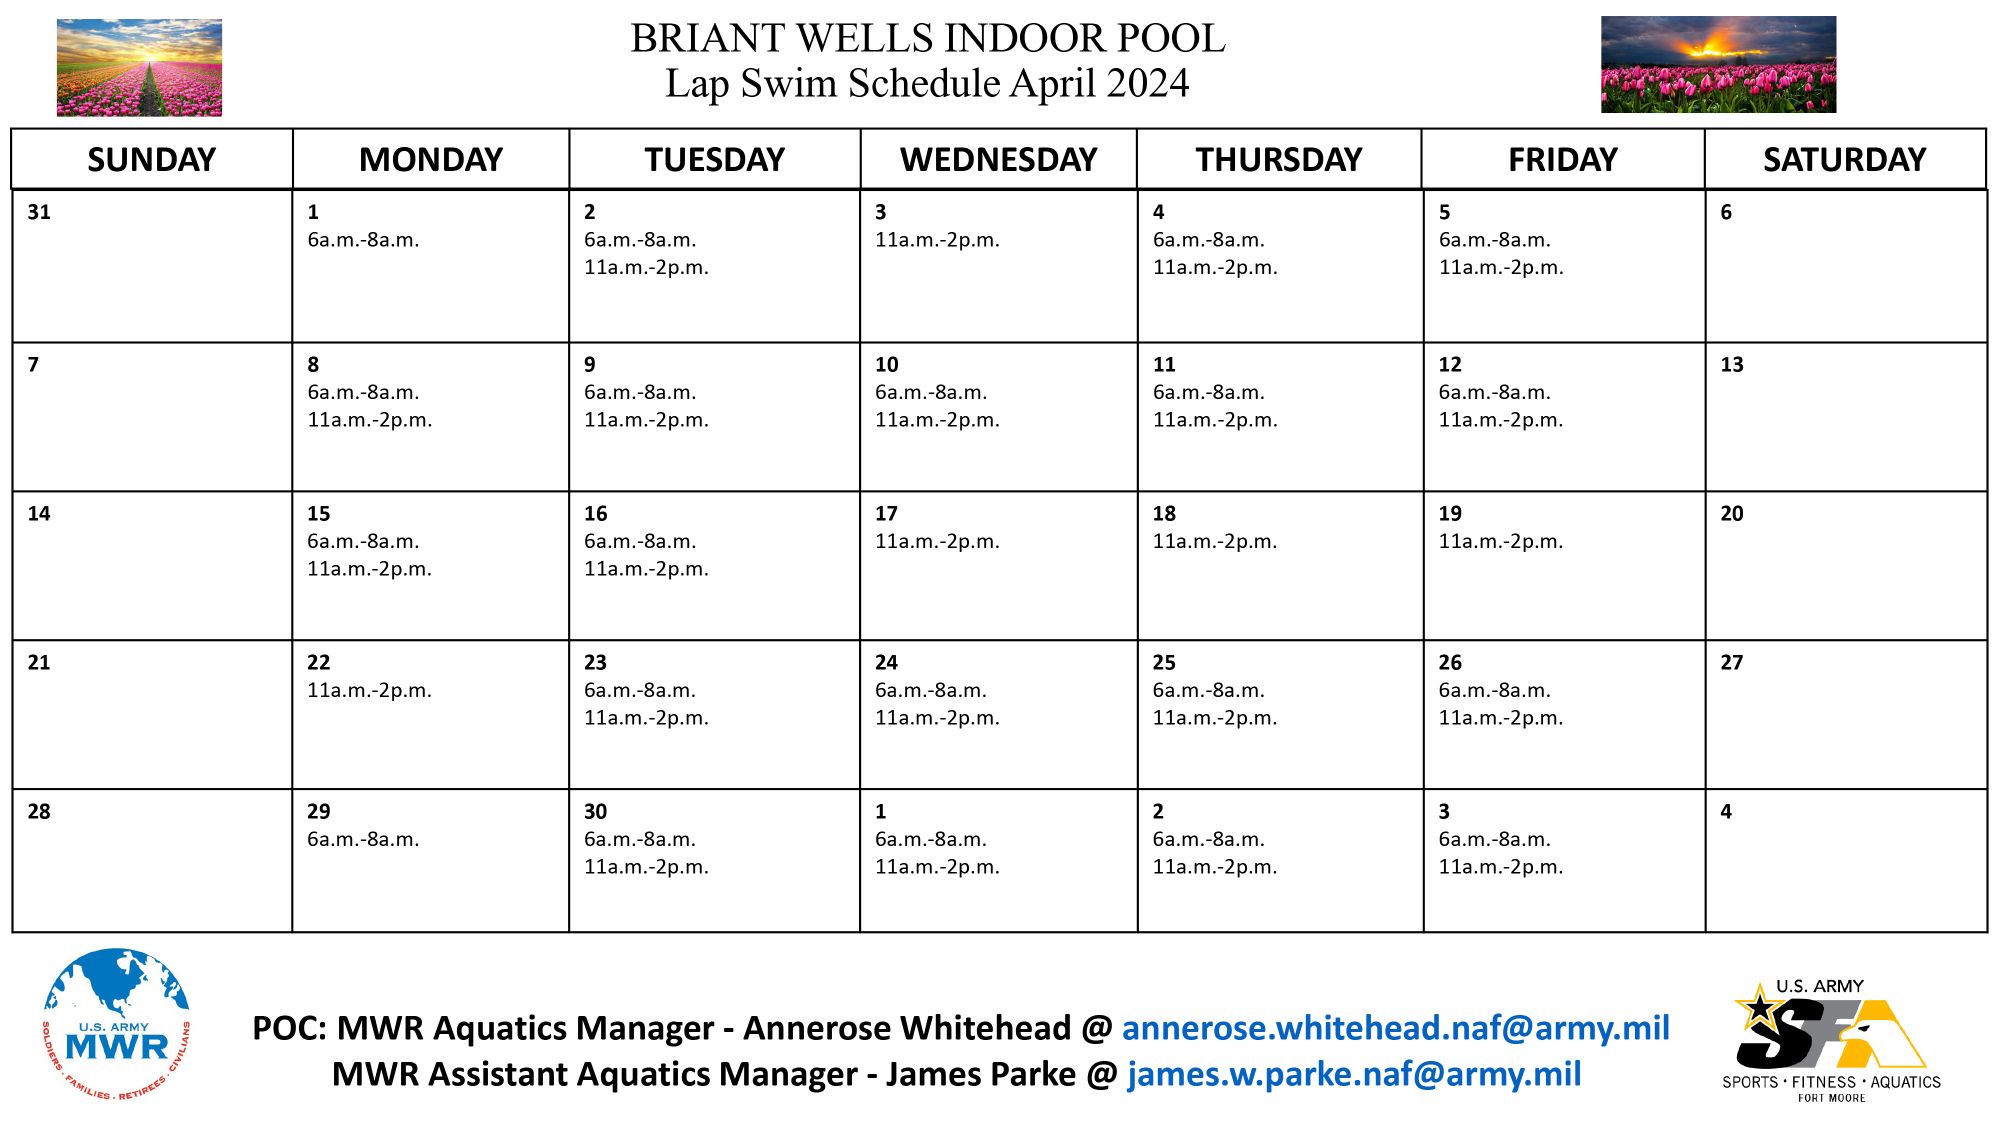 Briant Wells Pool  LAP SWIM  Apr 2024.jpg